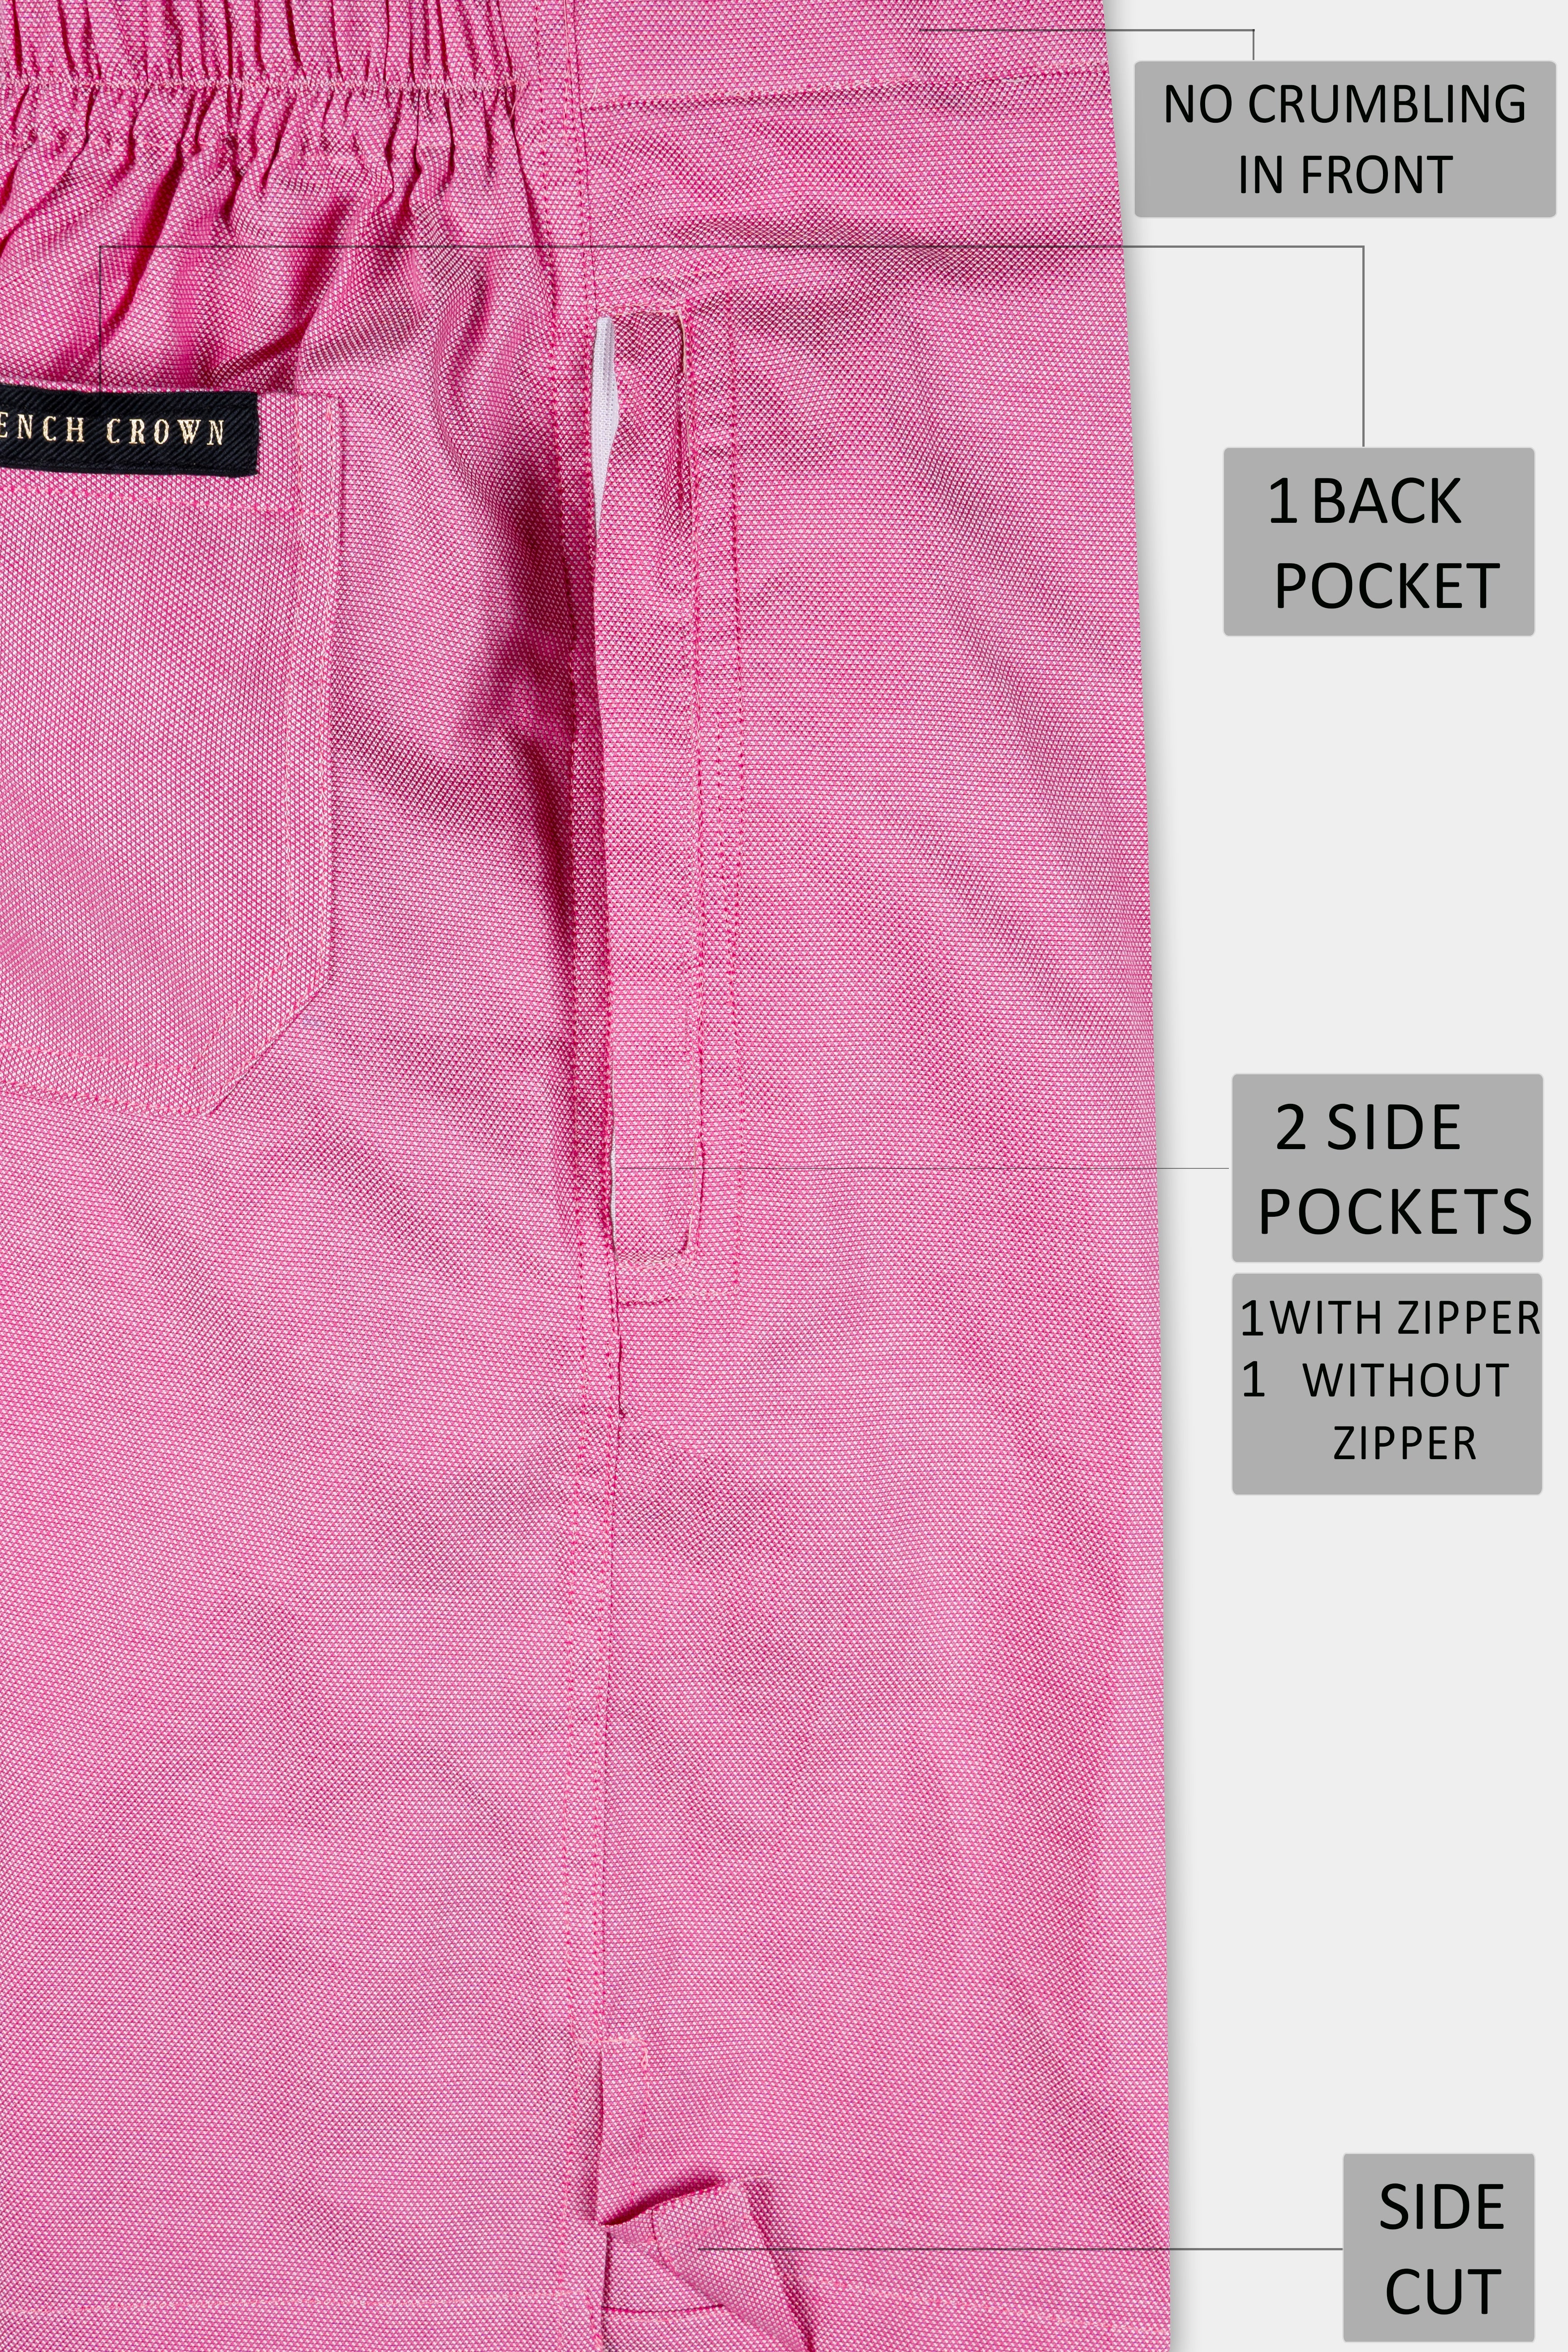 Thulian Pink Dobby Textured Giza Cotton Shorts SR378-28, SR378-30, SR378-32, SR378-34, SR378-36, SR378-38, SR378-40, SR378-42, SR378-44